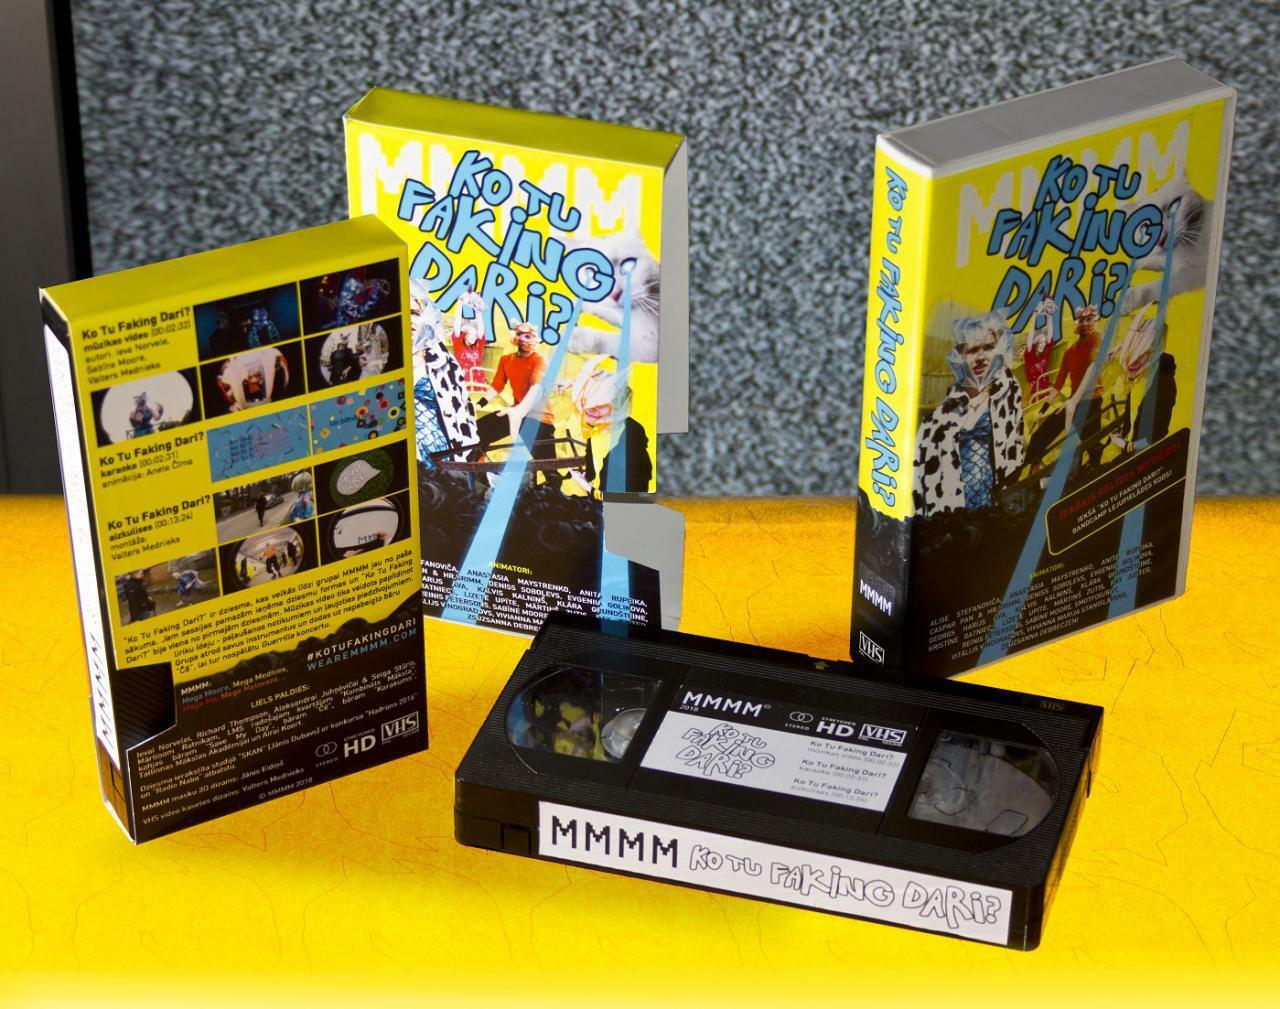 MMMM выпустили клип «Ko Tu Faking Dari?» на VHS